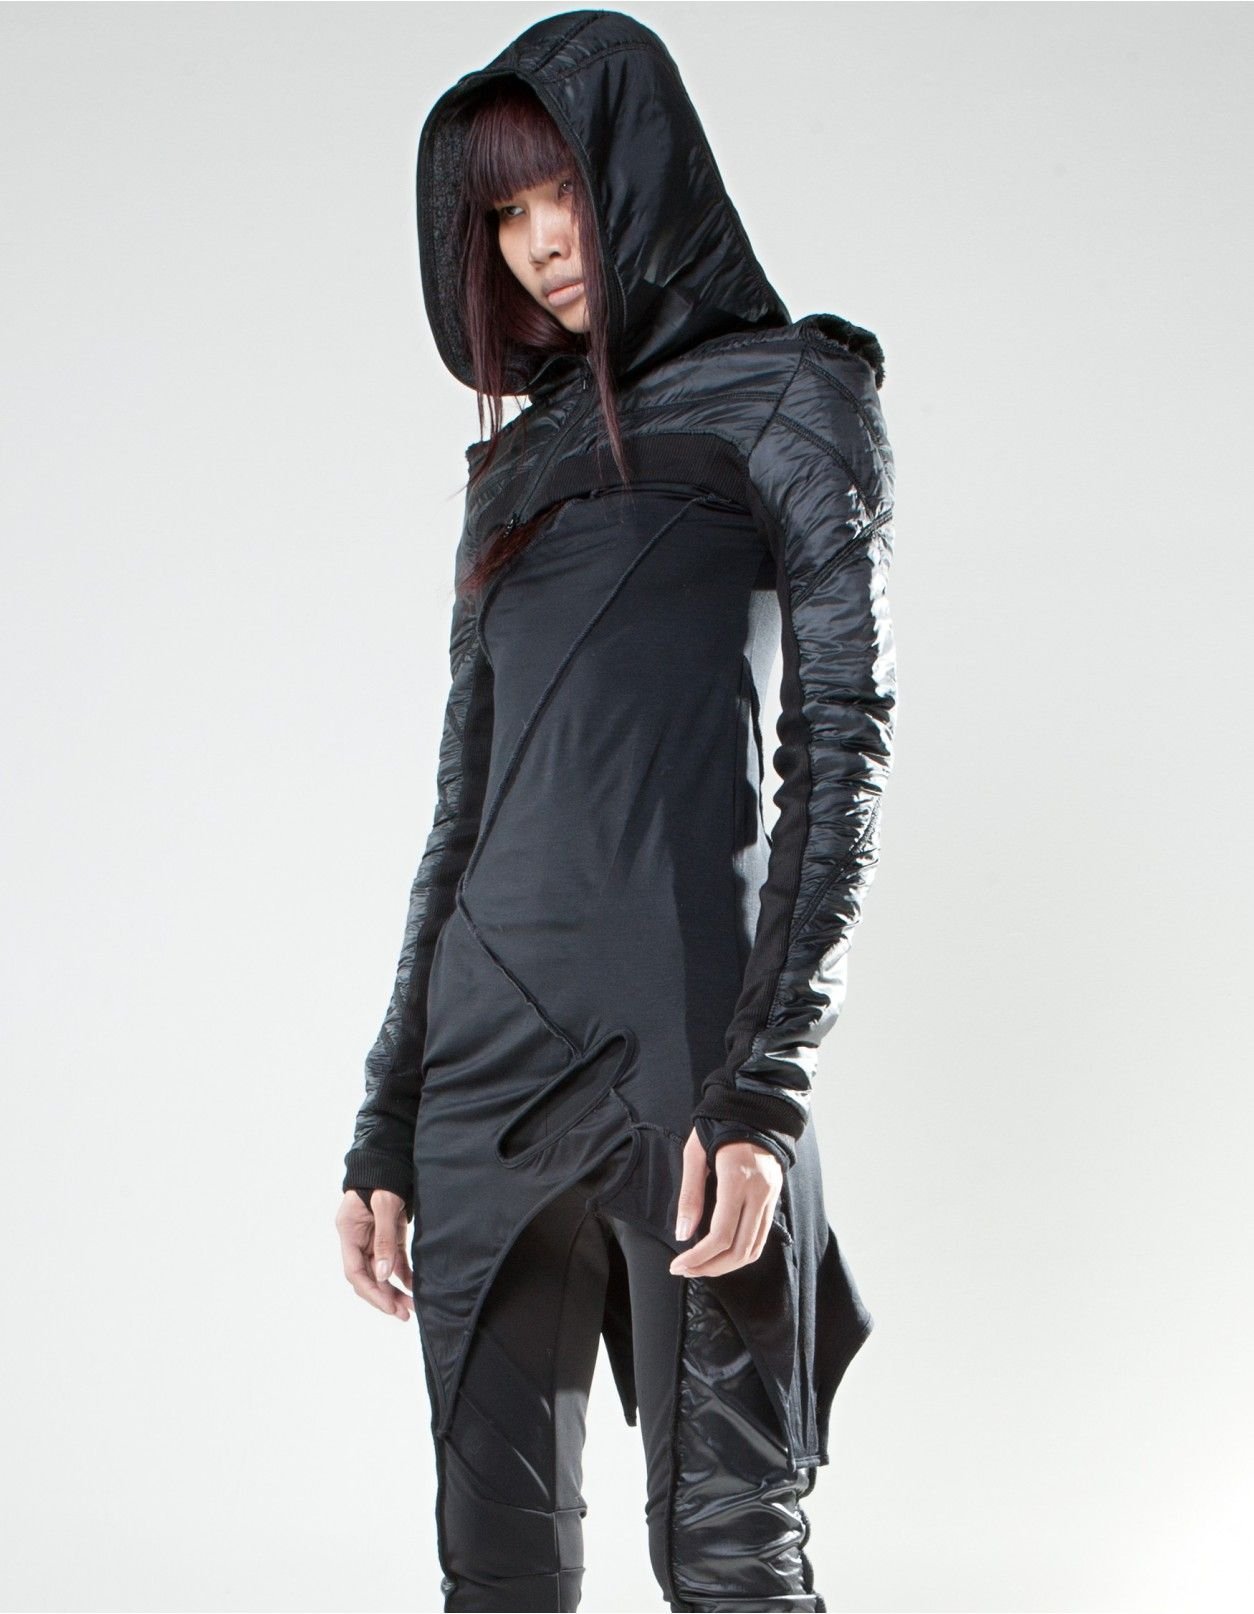 Cyberpunk clothes brands фото 78